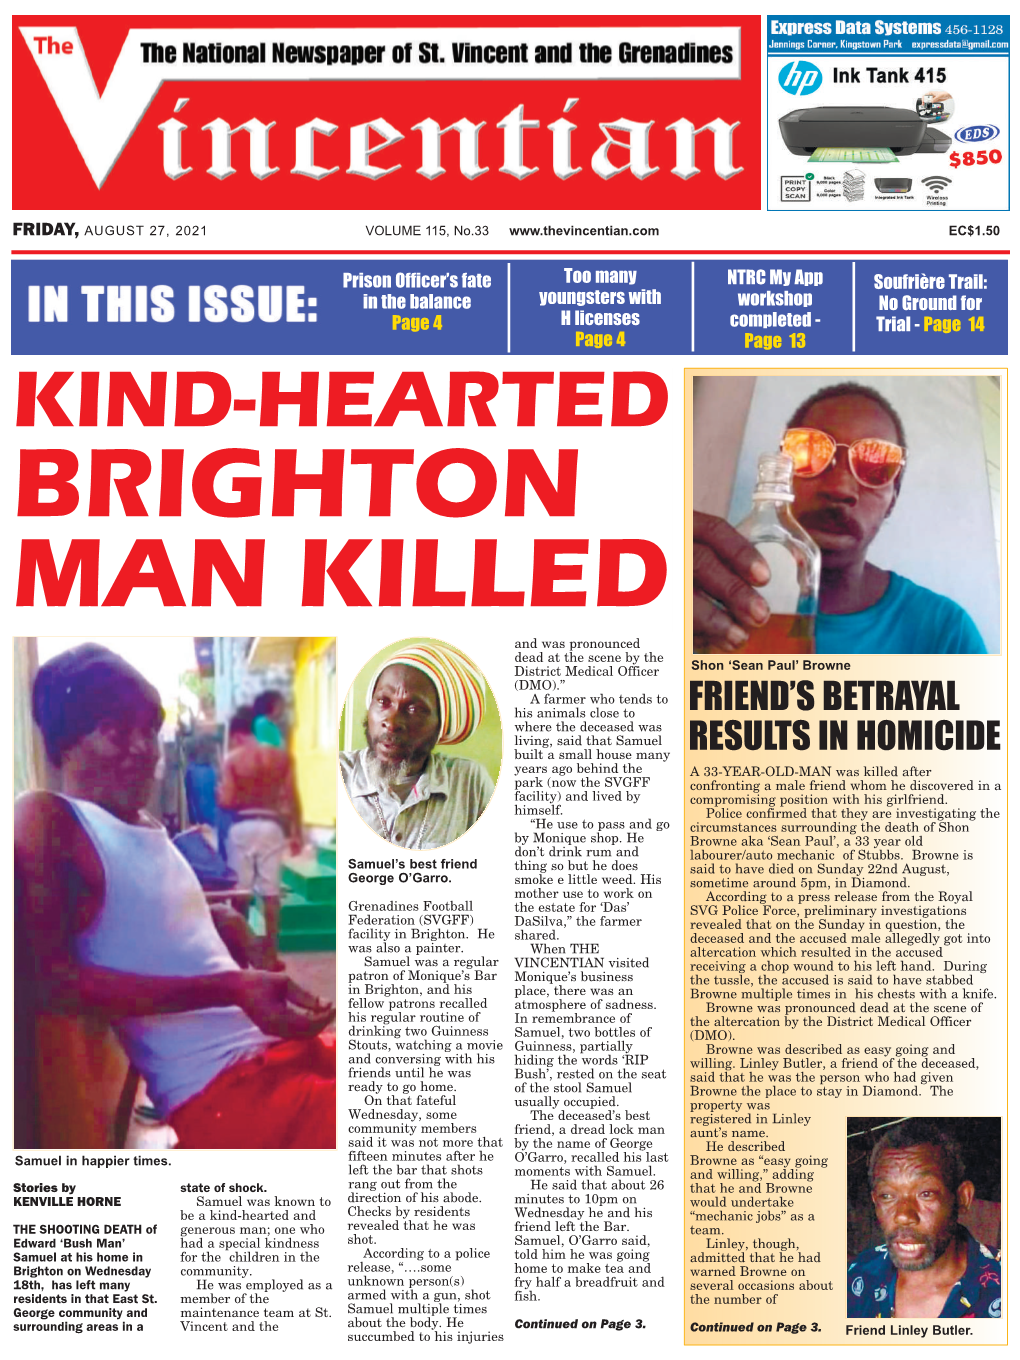 Kind-Hearted Brighton Man Killed